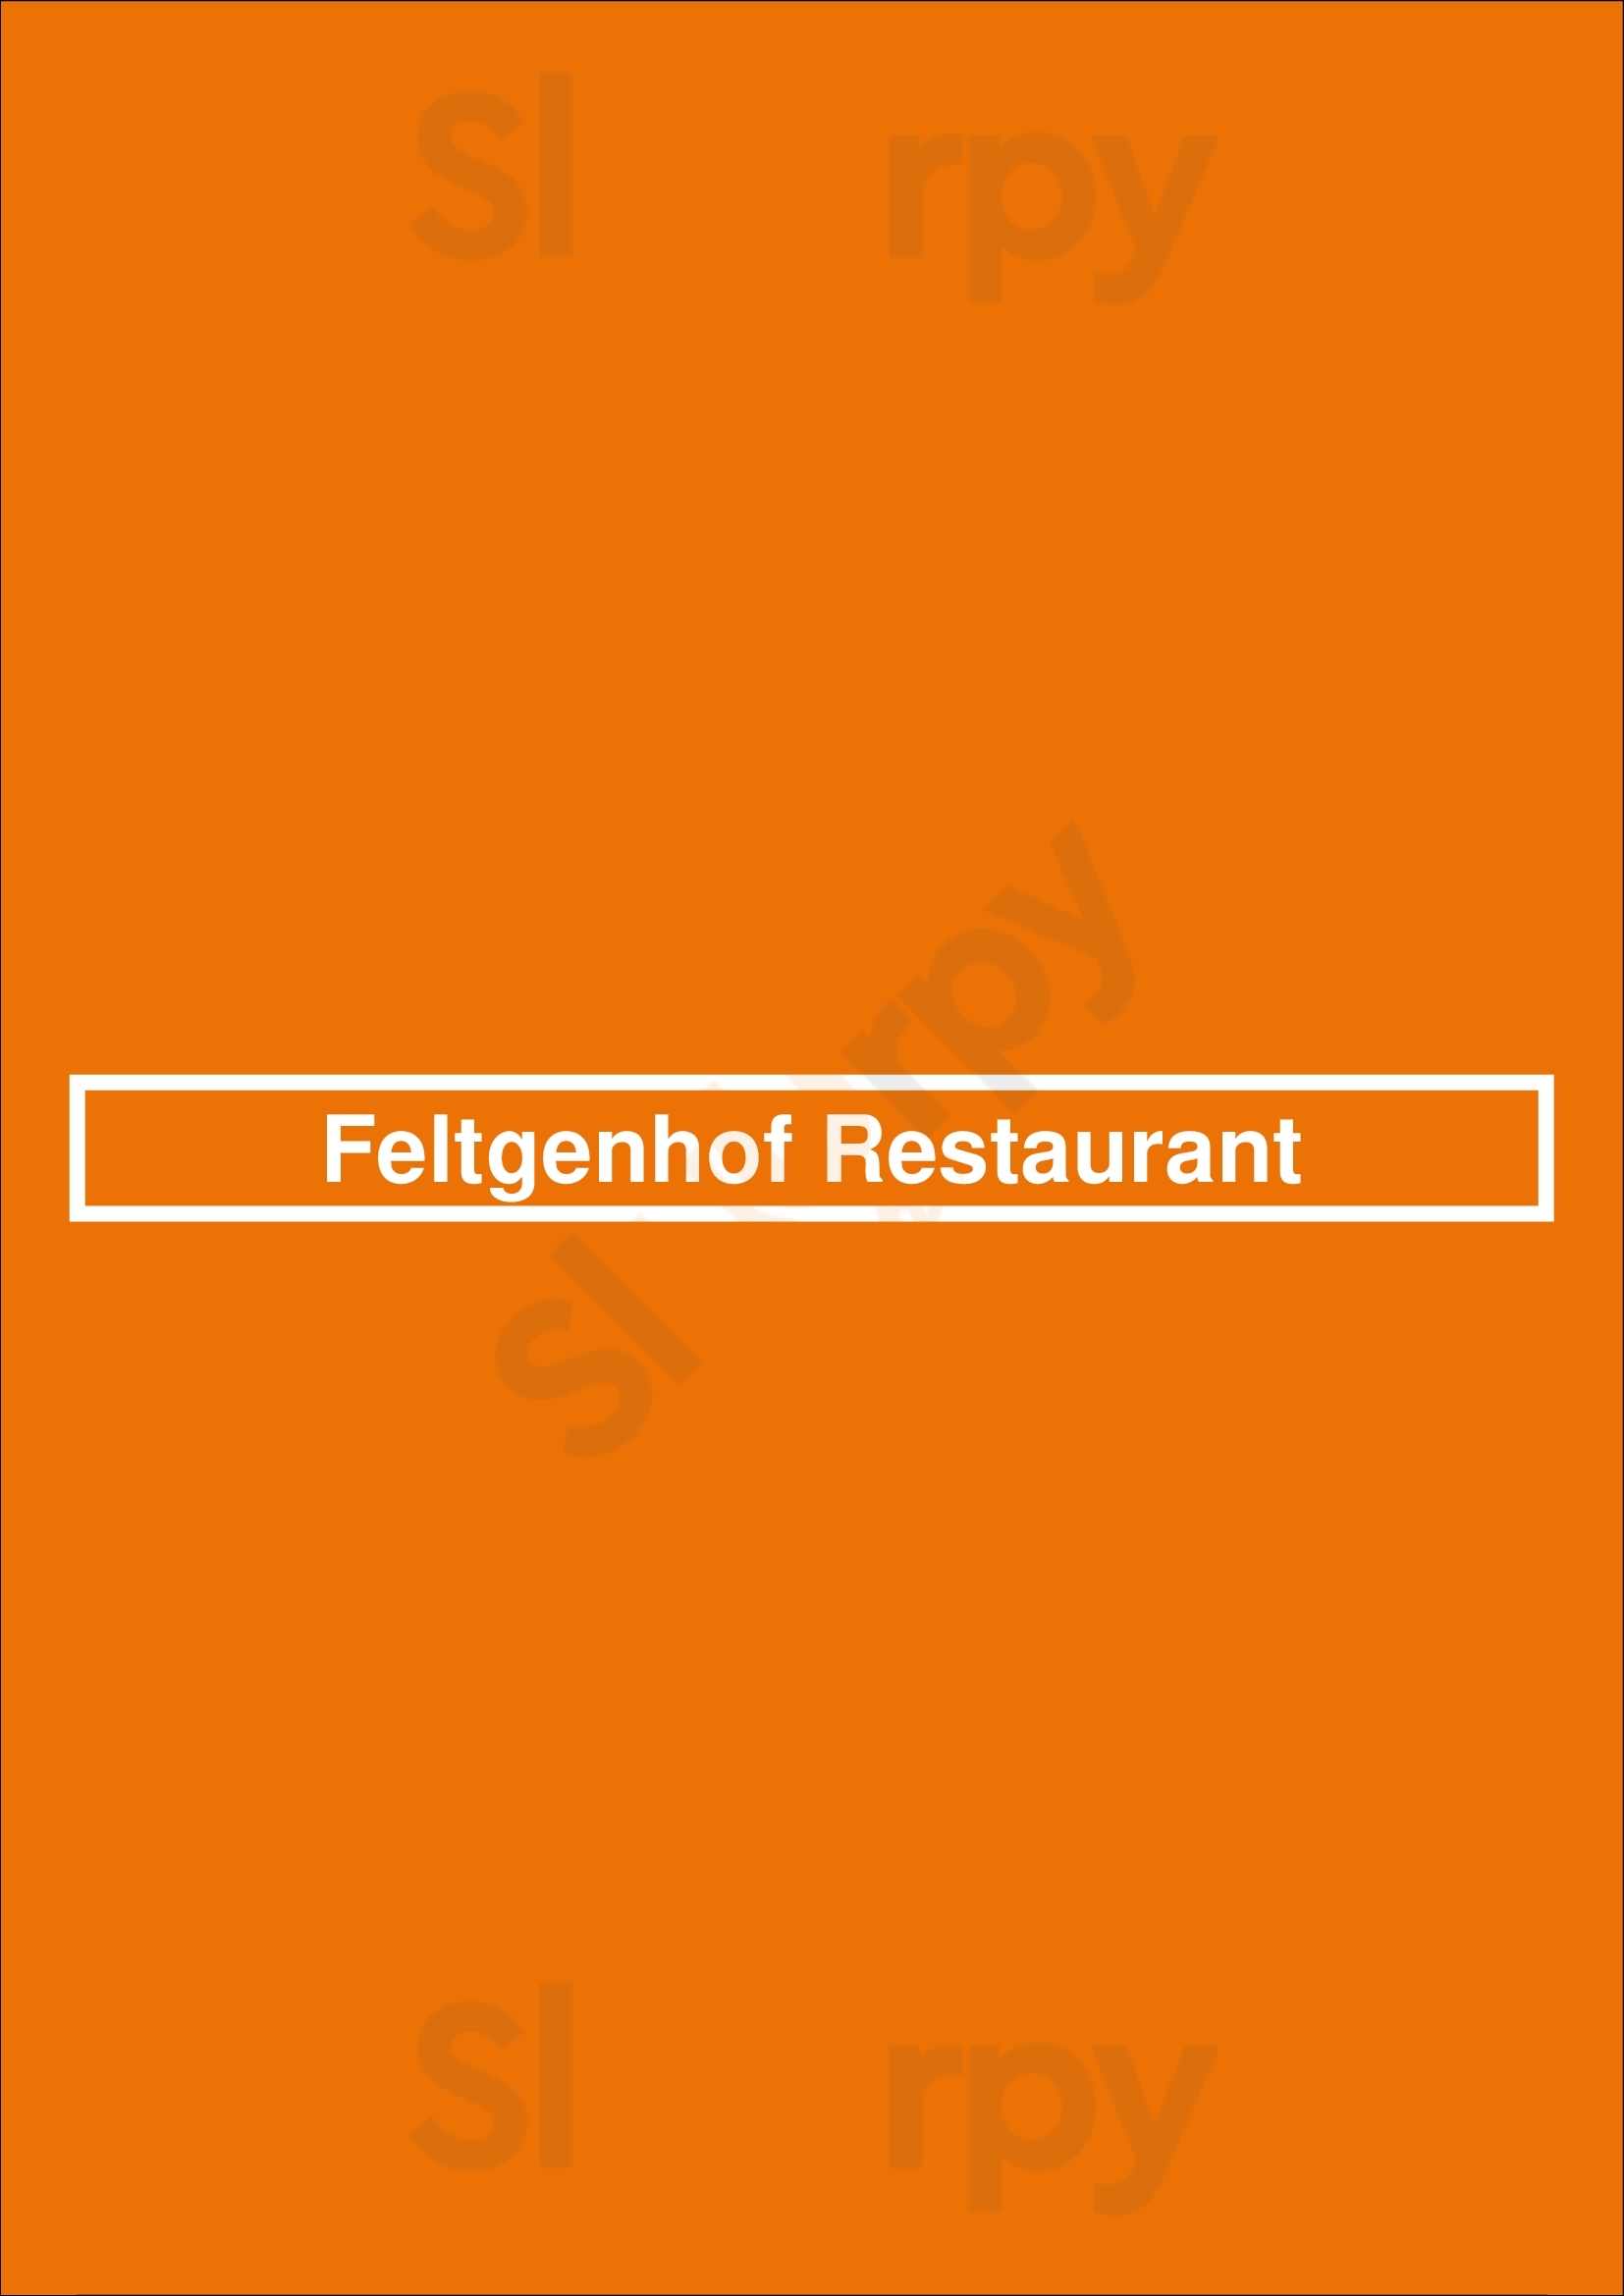 Feltgenhof Restaurant Moers Menu - 1